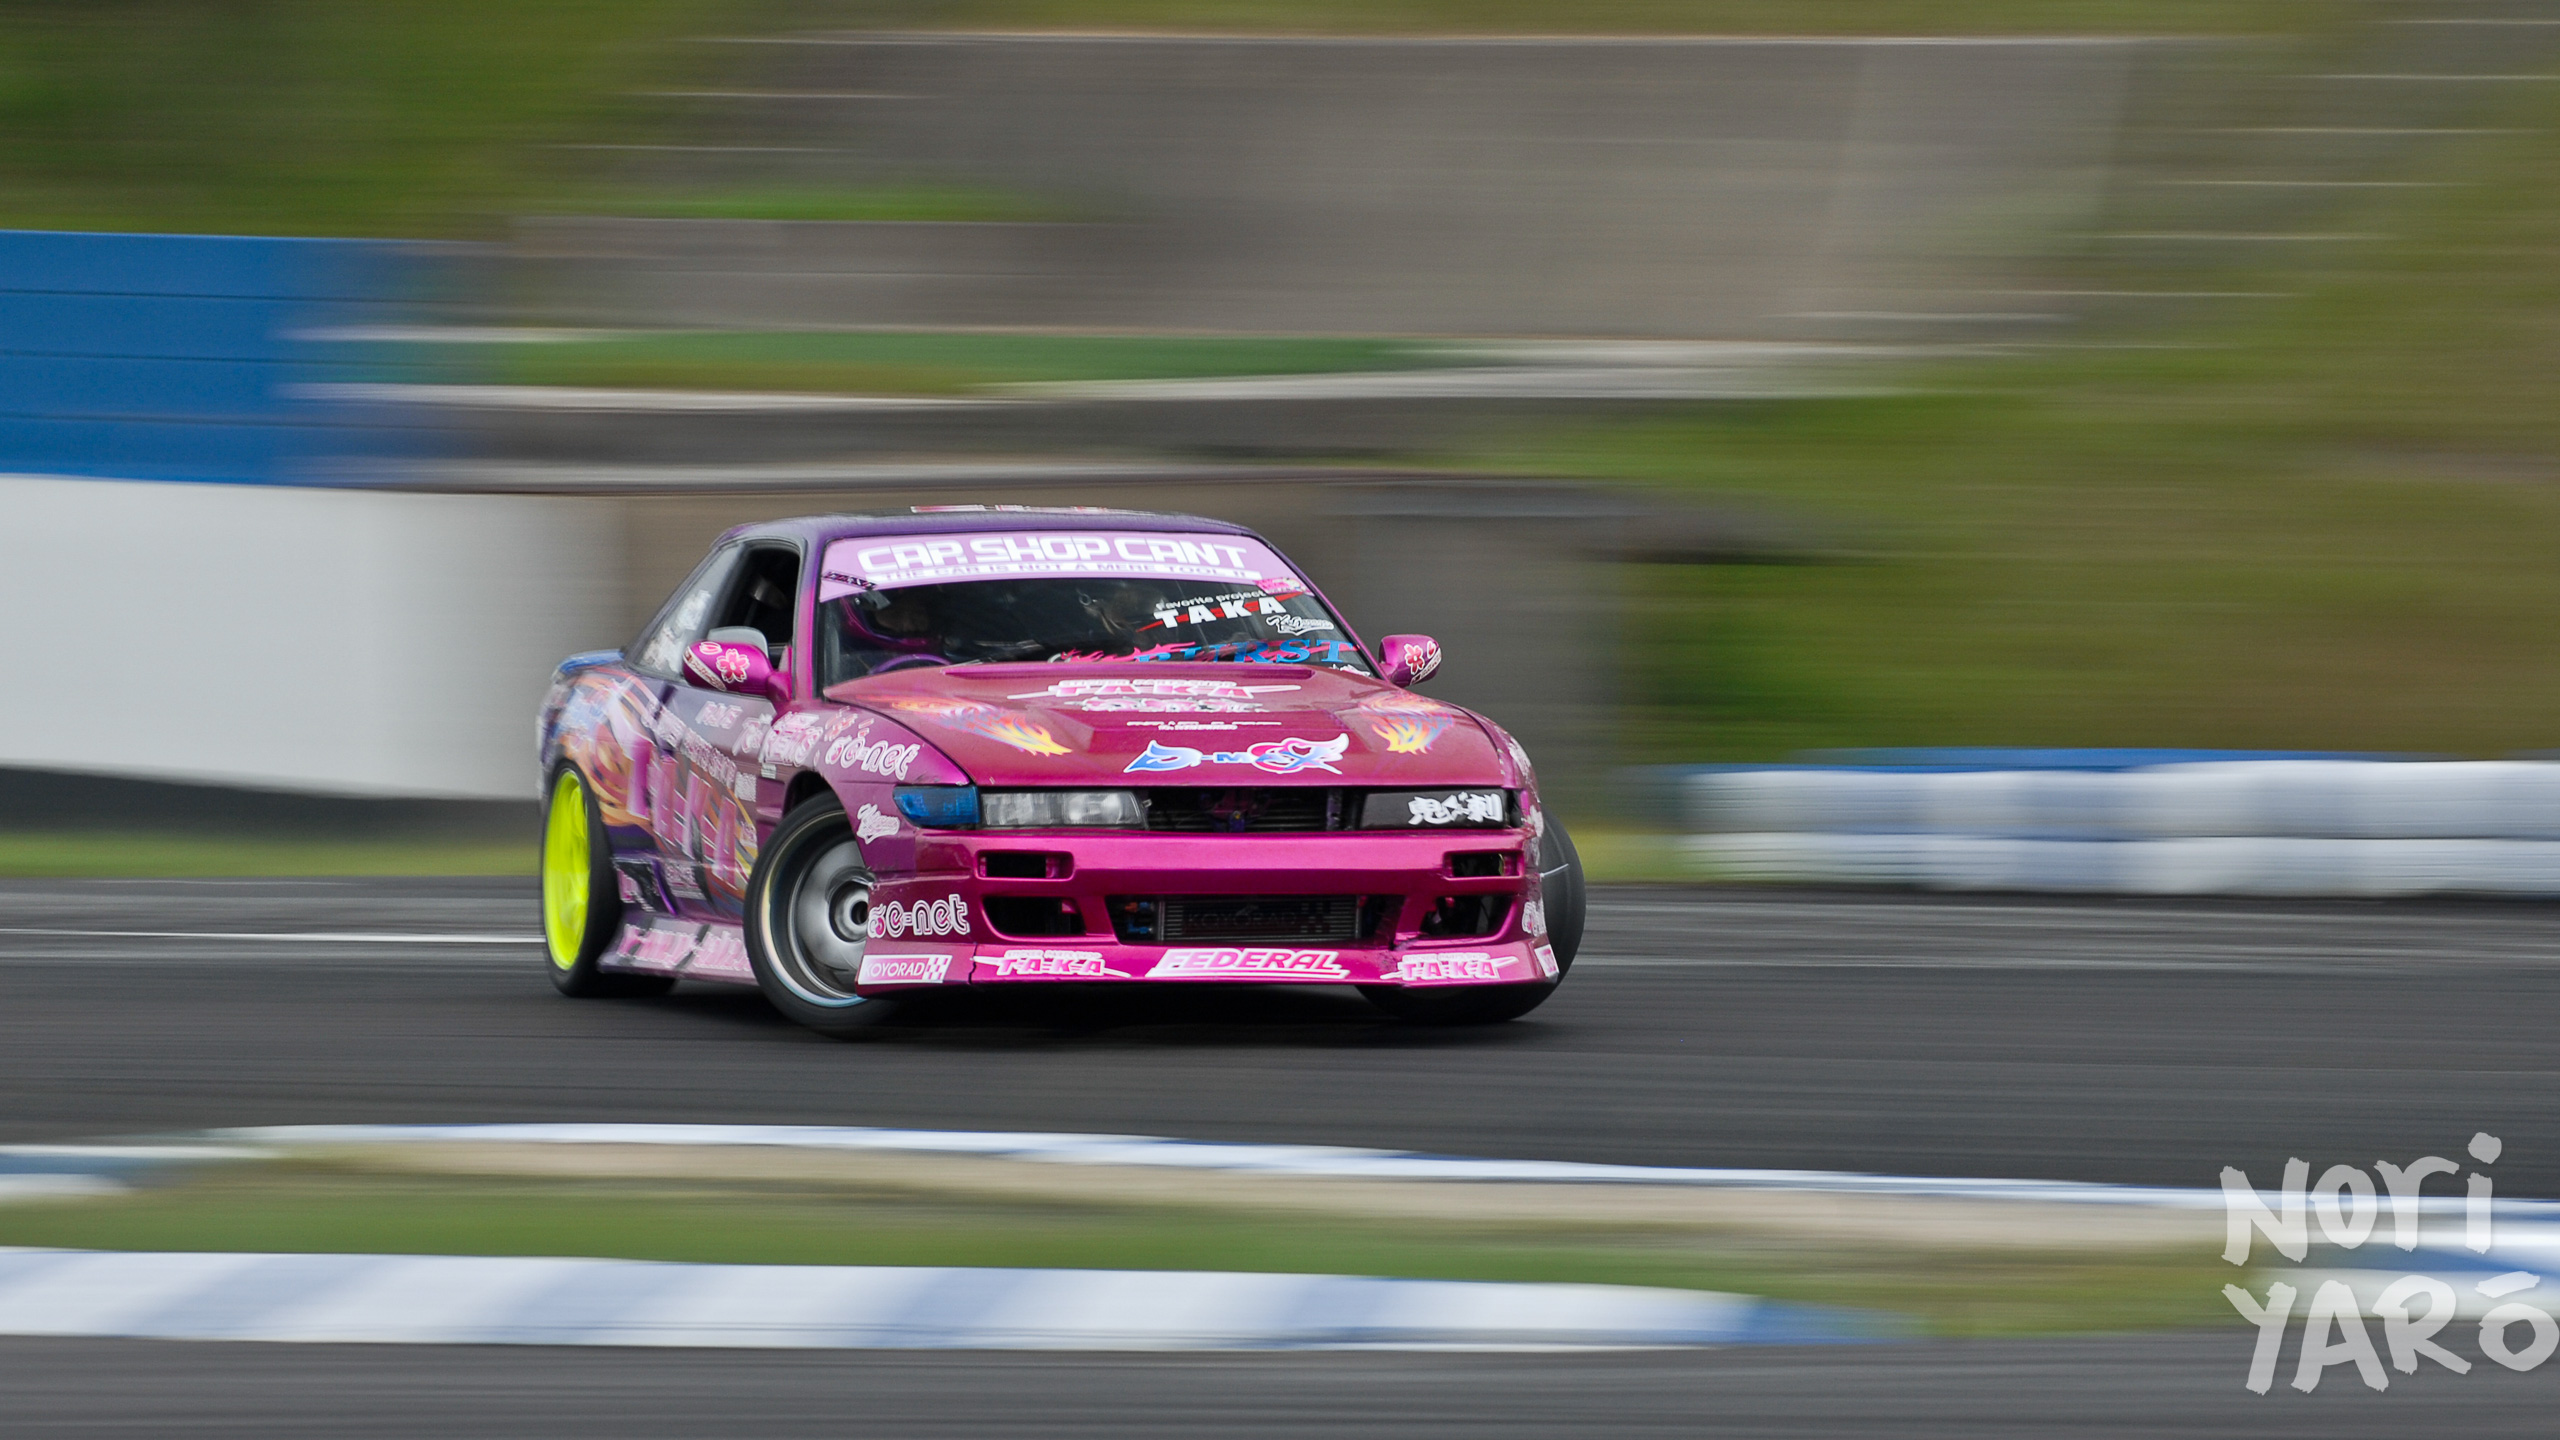 General 2560x1440 car Japanese cars sports car drift cars drift circuit race tracks Nissan Silvia S13 purple cars pink cars race cars